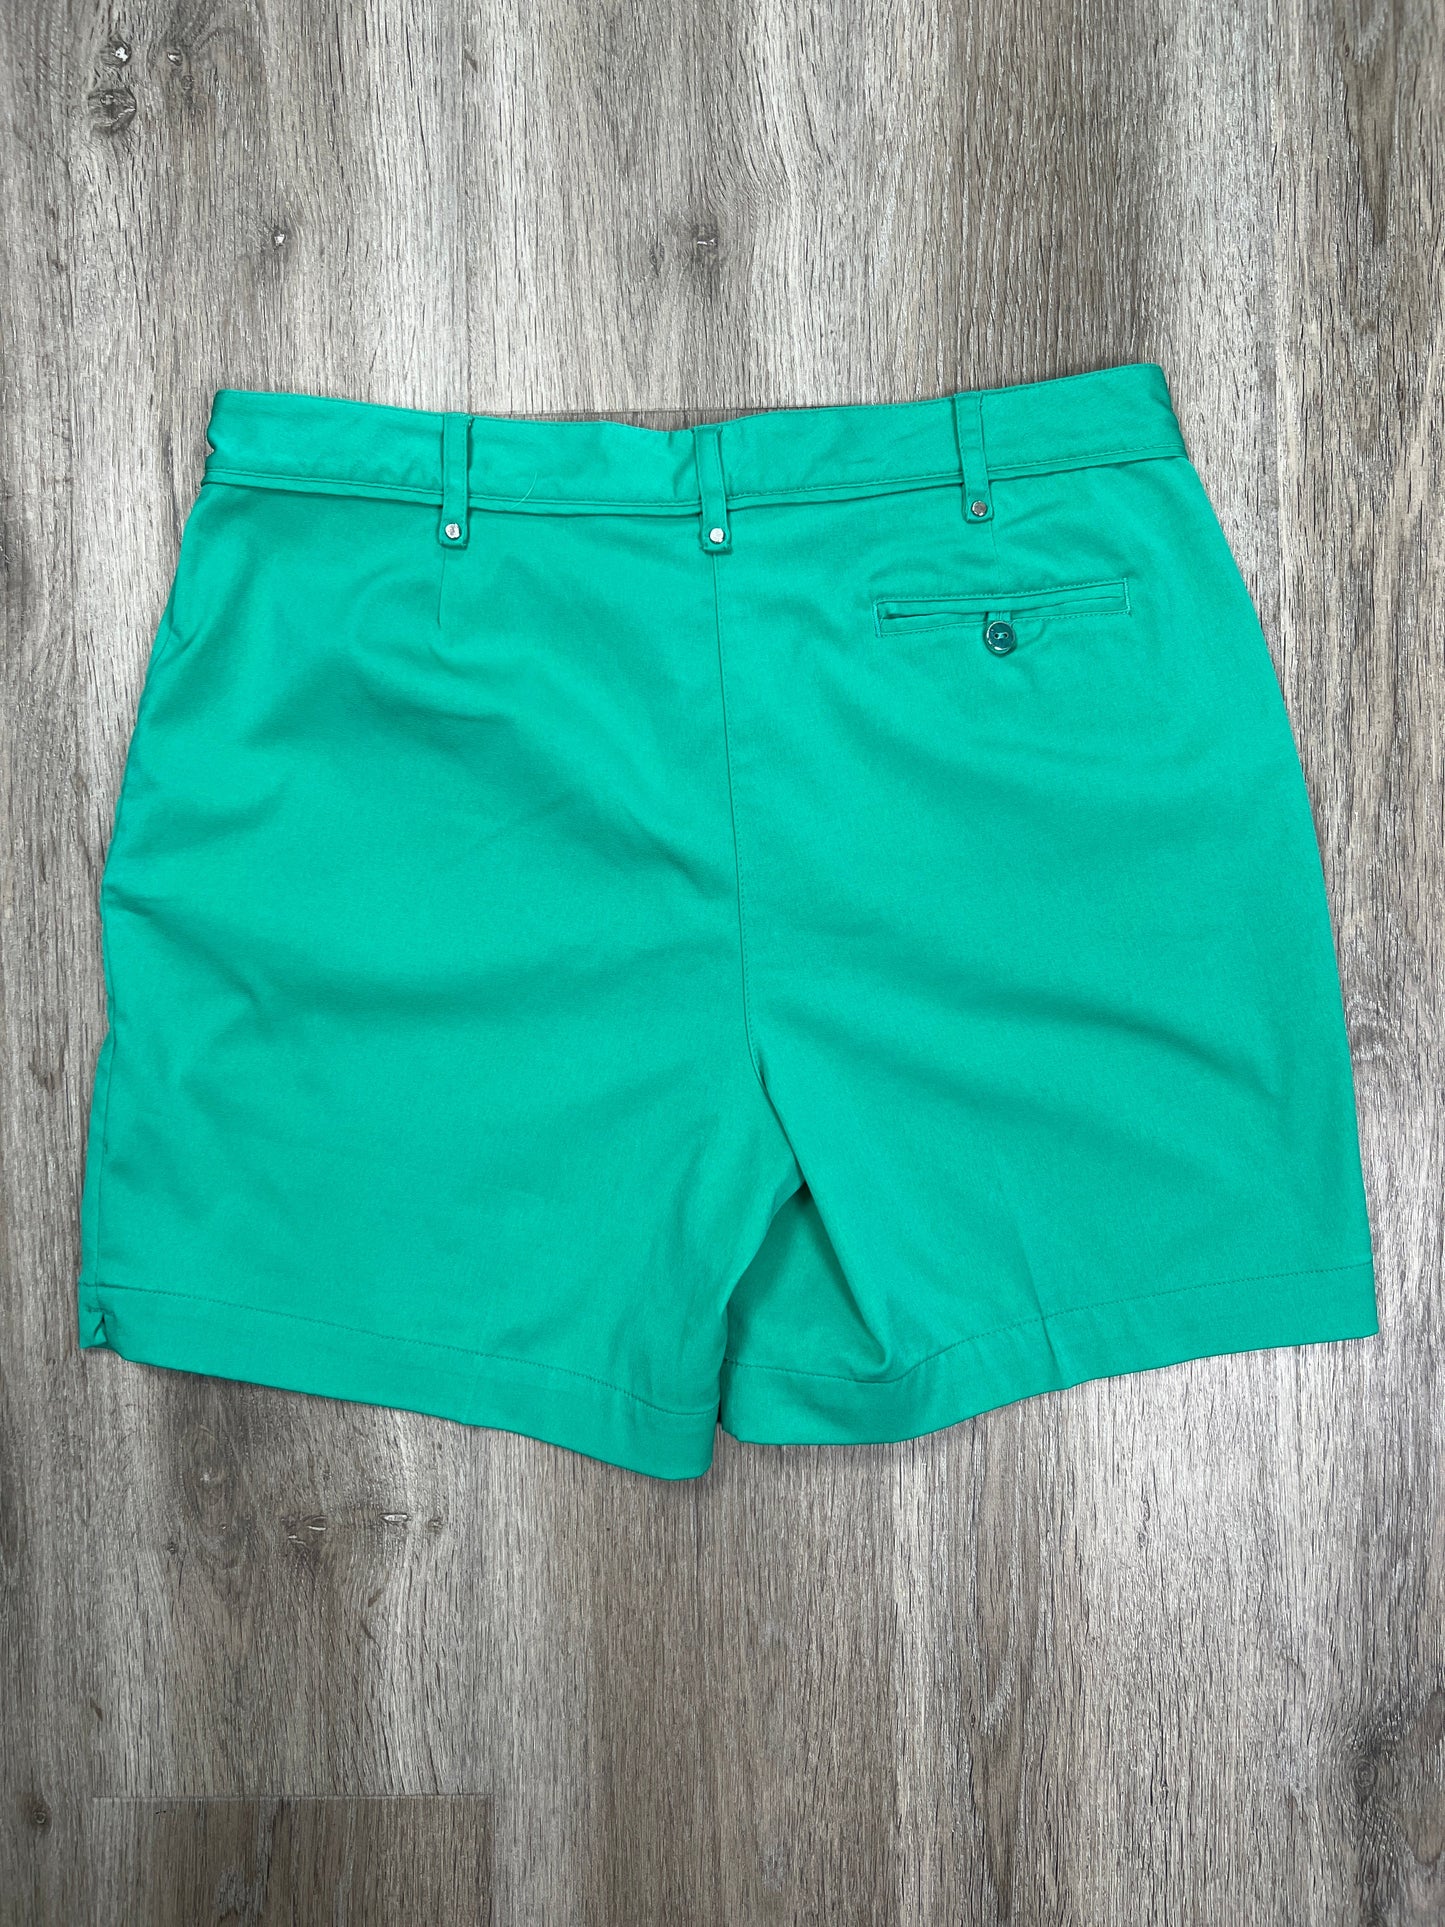 Green Shorts Lady Hagen, Size L